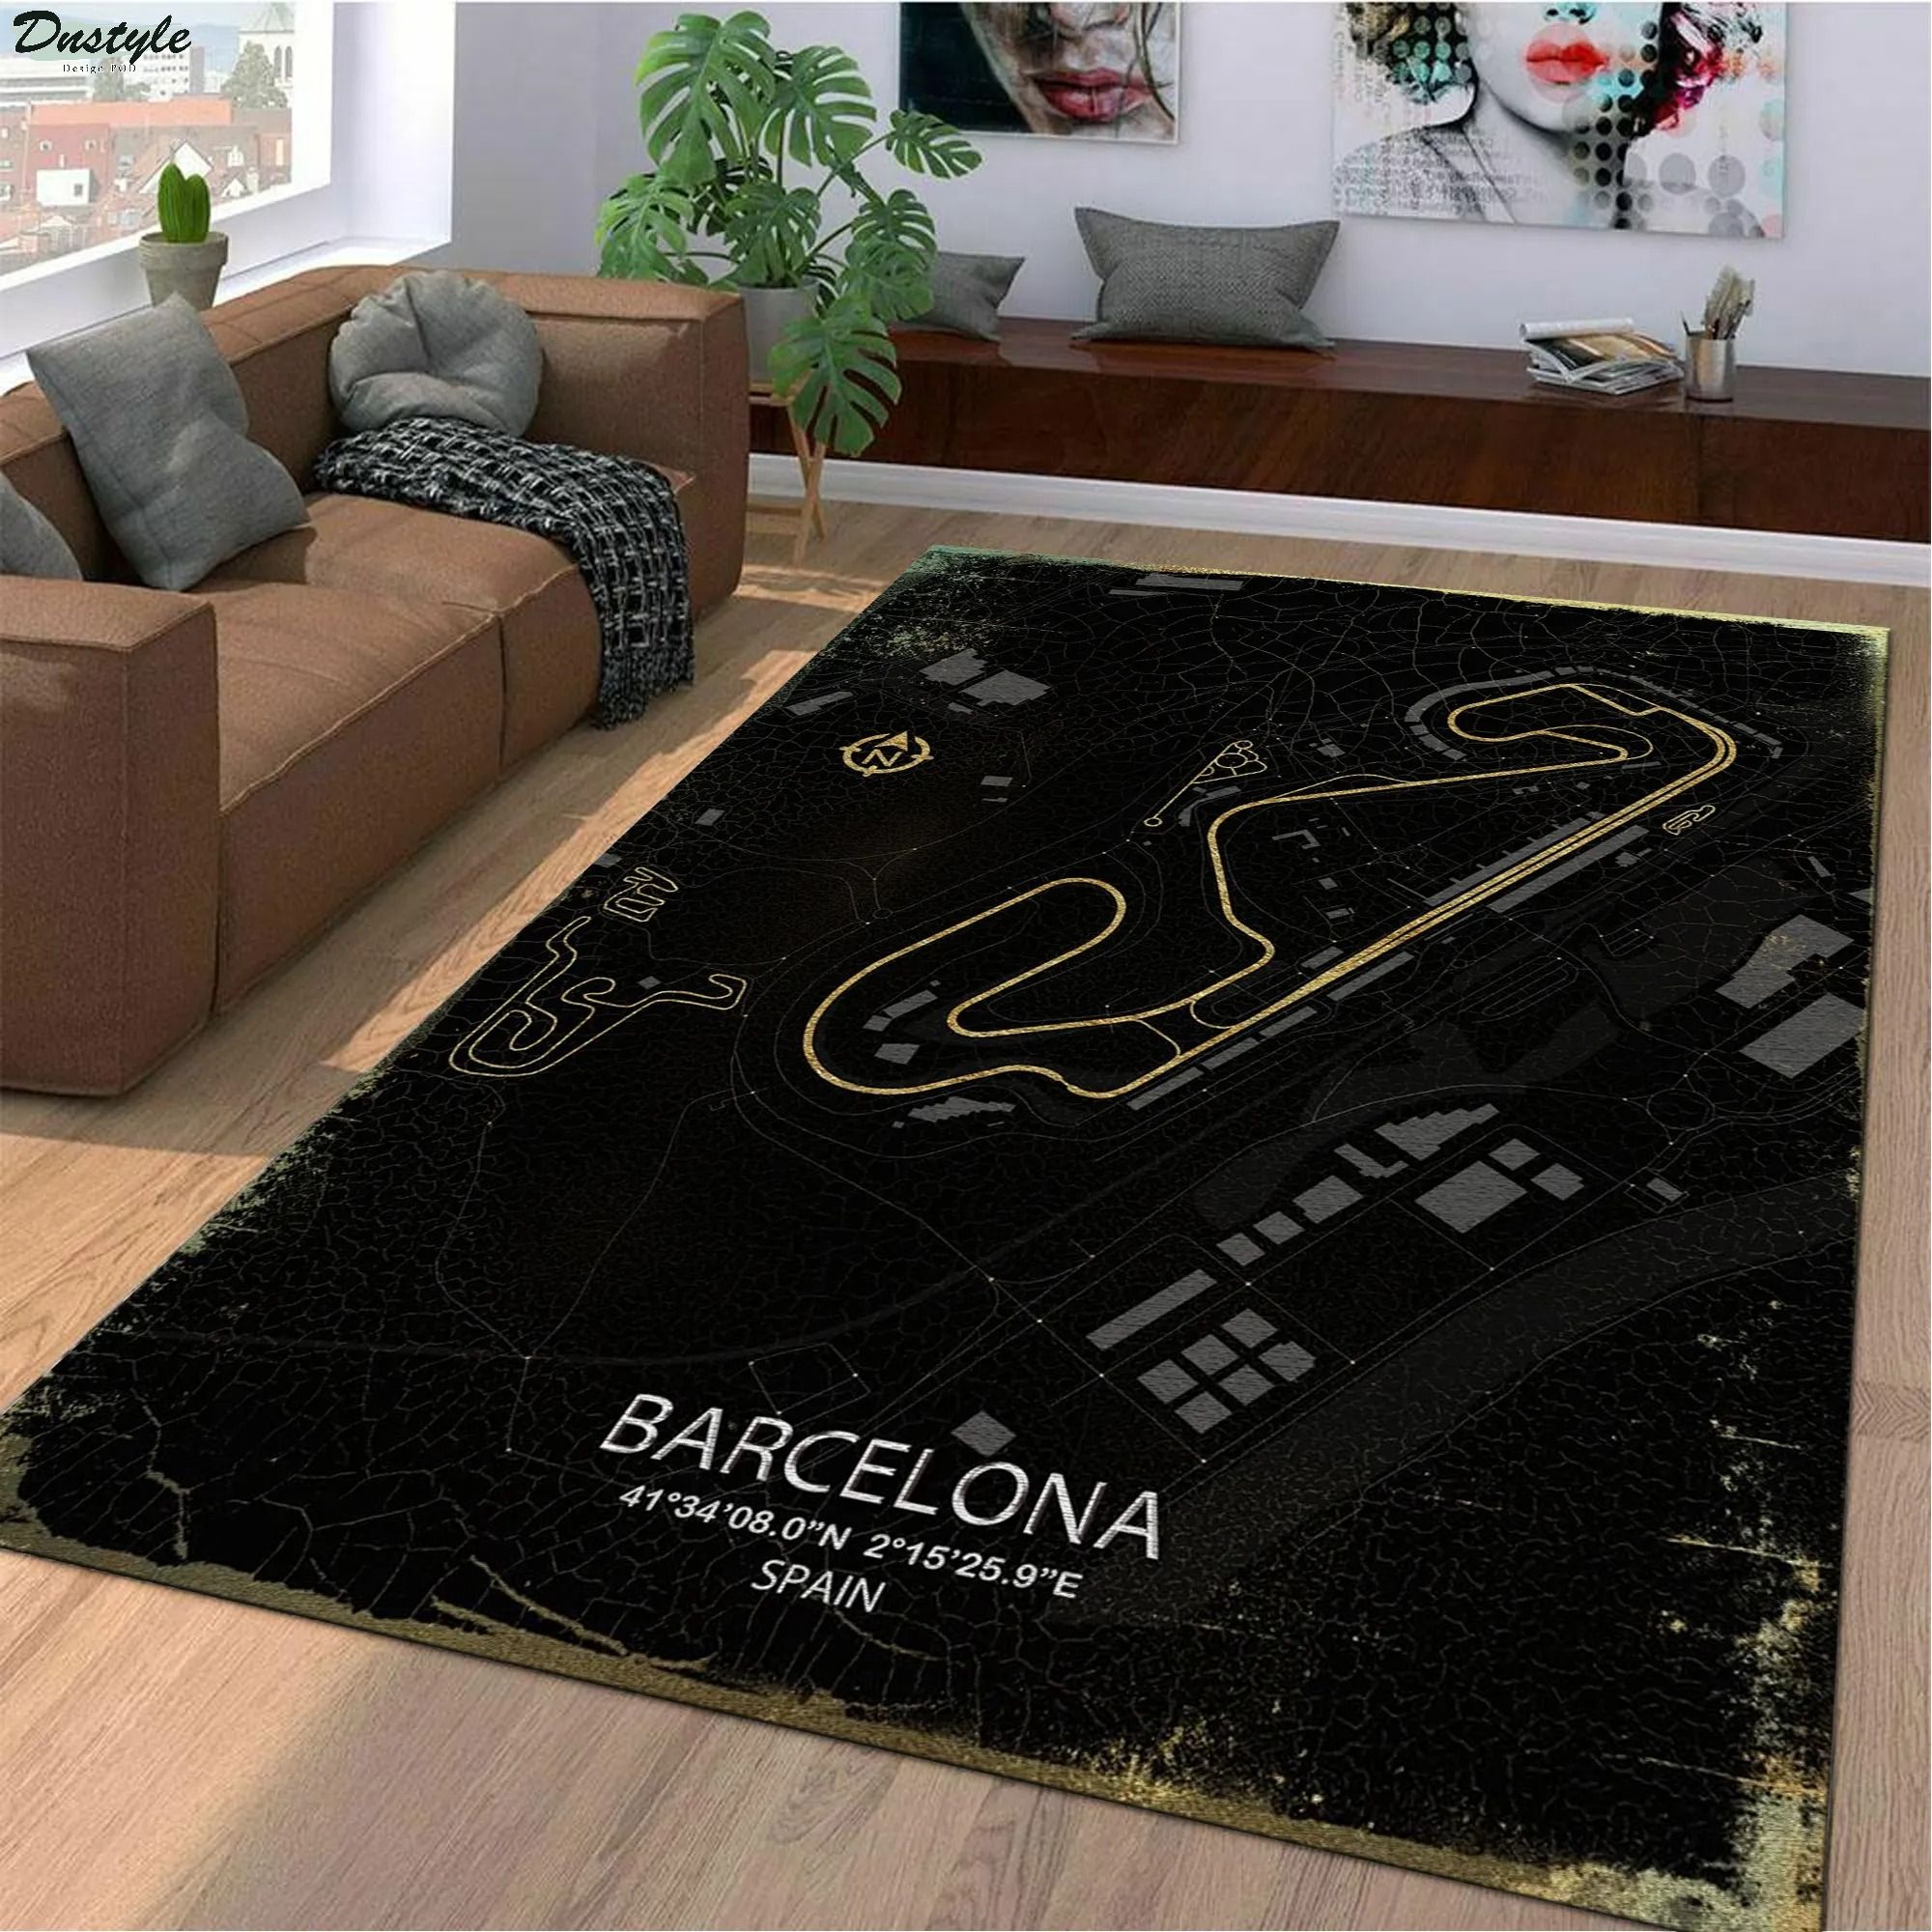 Barcelona spain f1 track rug